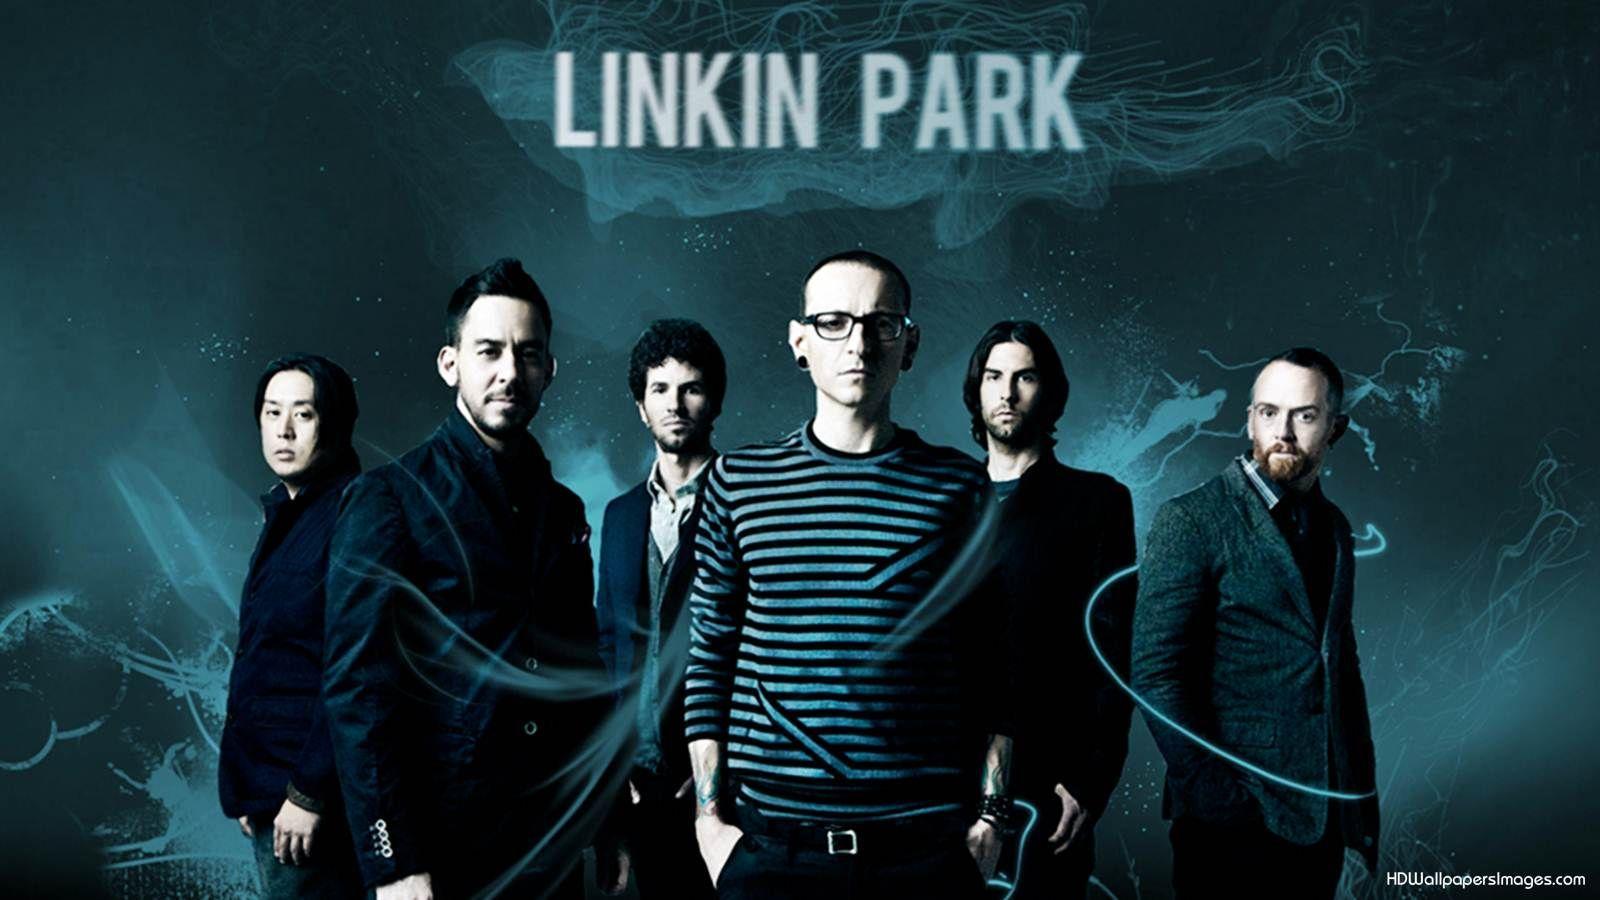 HD Wallpapers Of Linkin Park - Wallpaper Cave - DaftSex HD